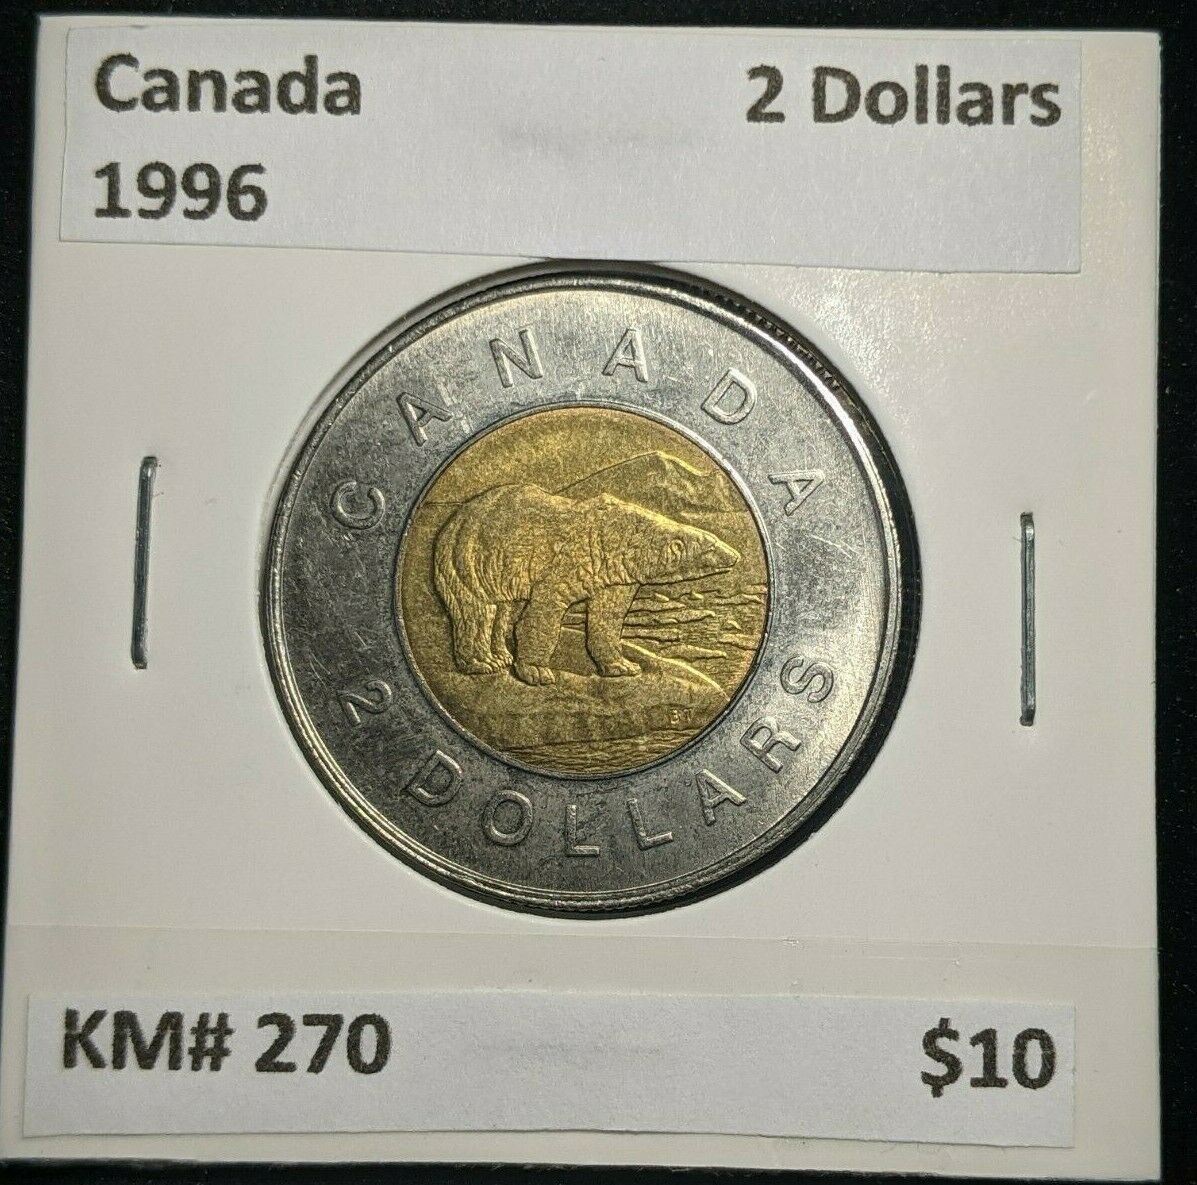 Canada 1996 2 Dollars KM# 270 #1381